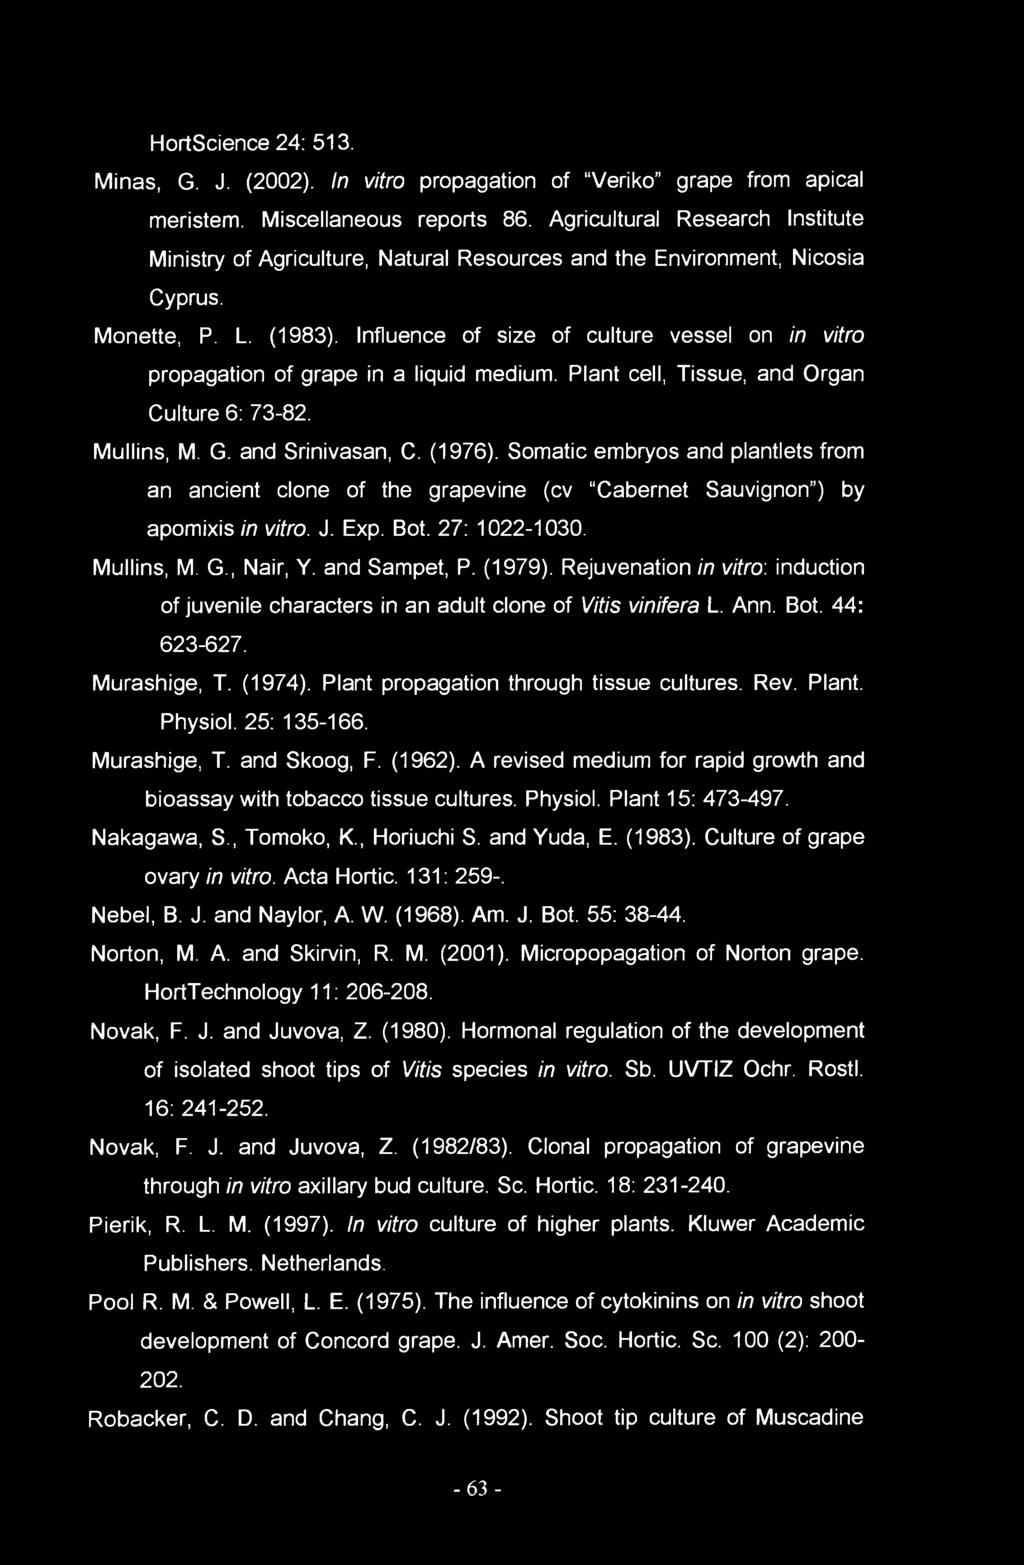 HrtScience 24: 53. Minas, G. J. (2002). In vitr prpagatin f Verik grape frm apical meristem. Miscellaneus reprts 86.